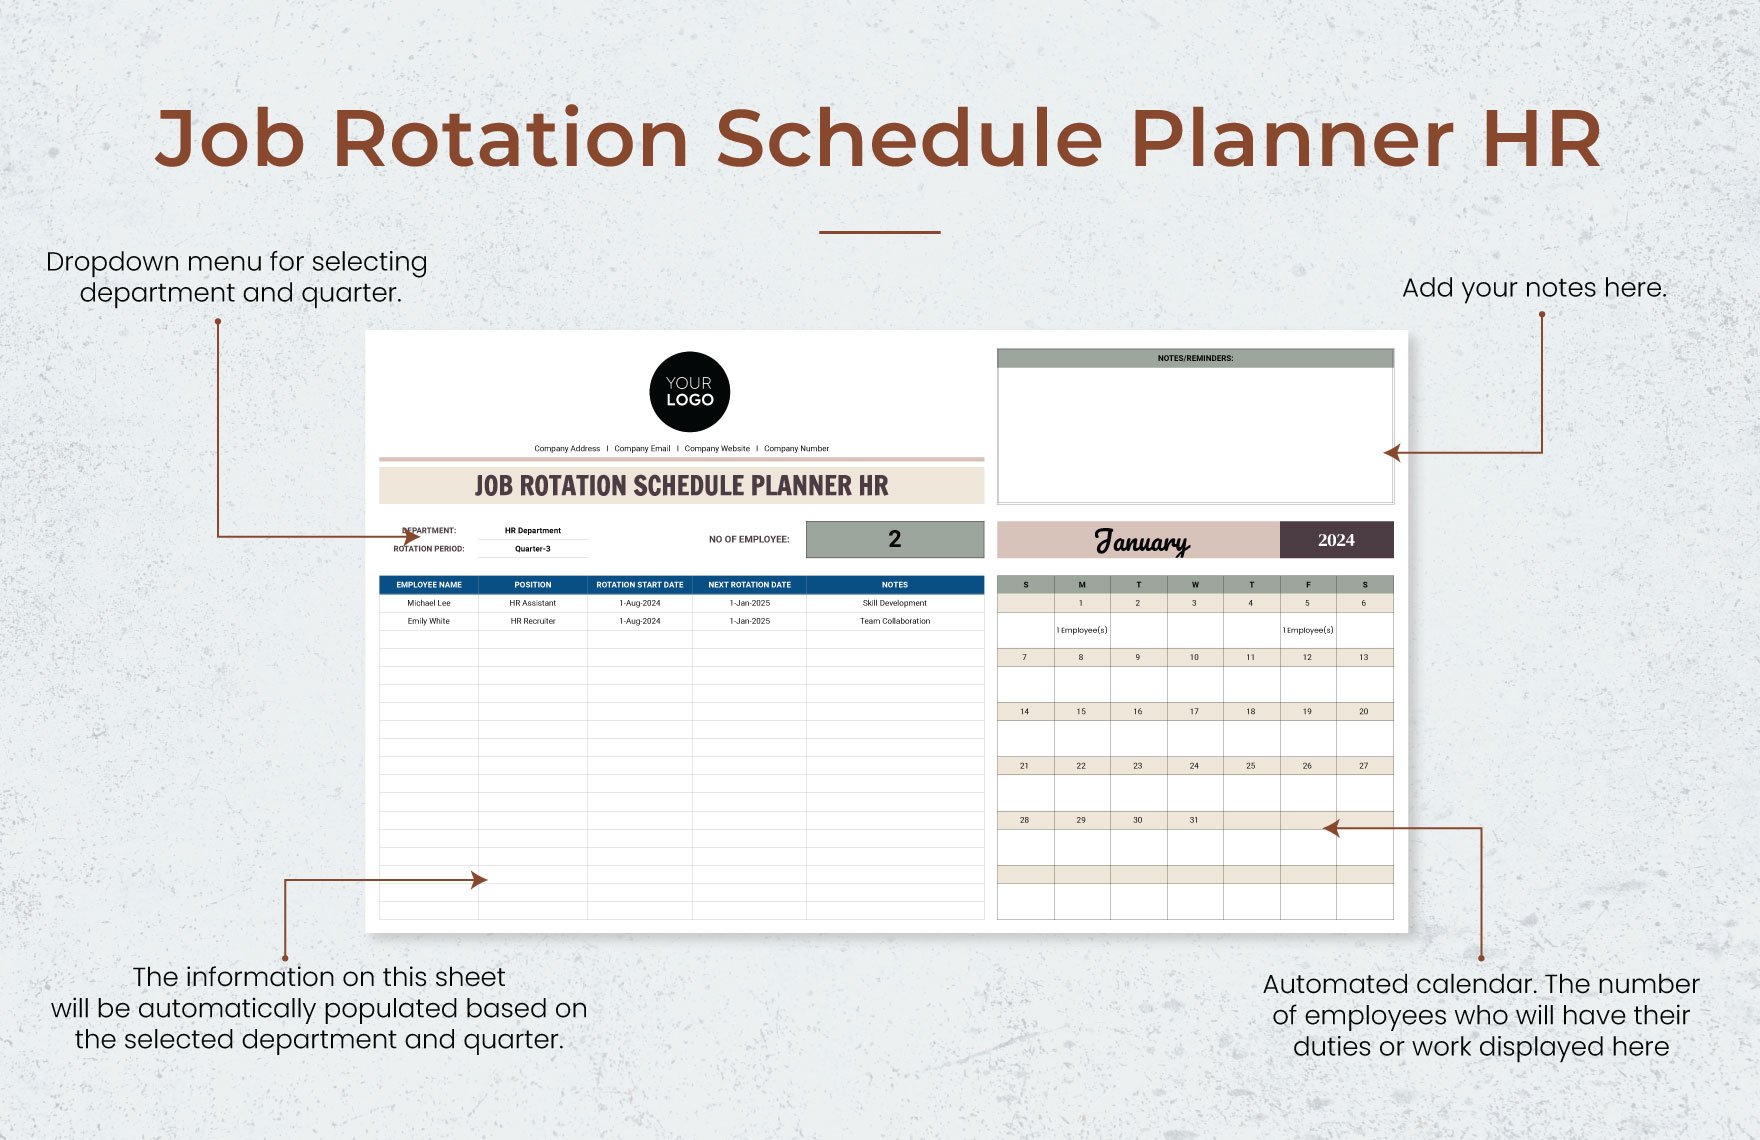 Job Rotation Schedule Planner HR Template